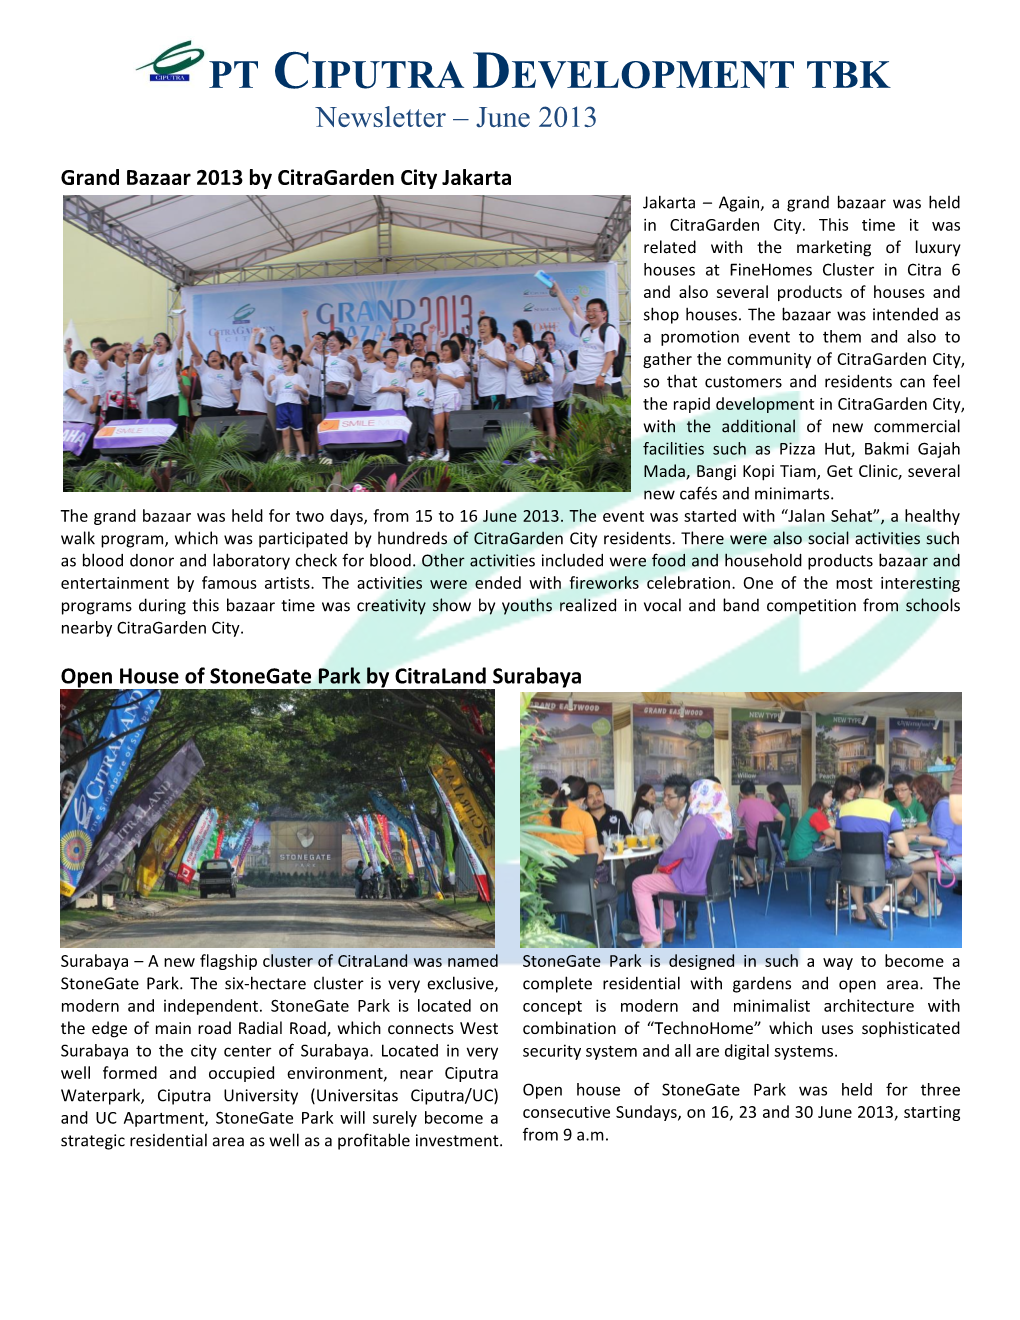 PT CIPUTRA DEVELOPMENT TBK Newsletter – June 2013